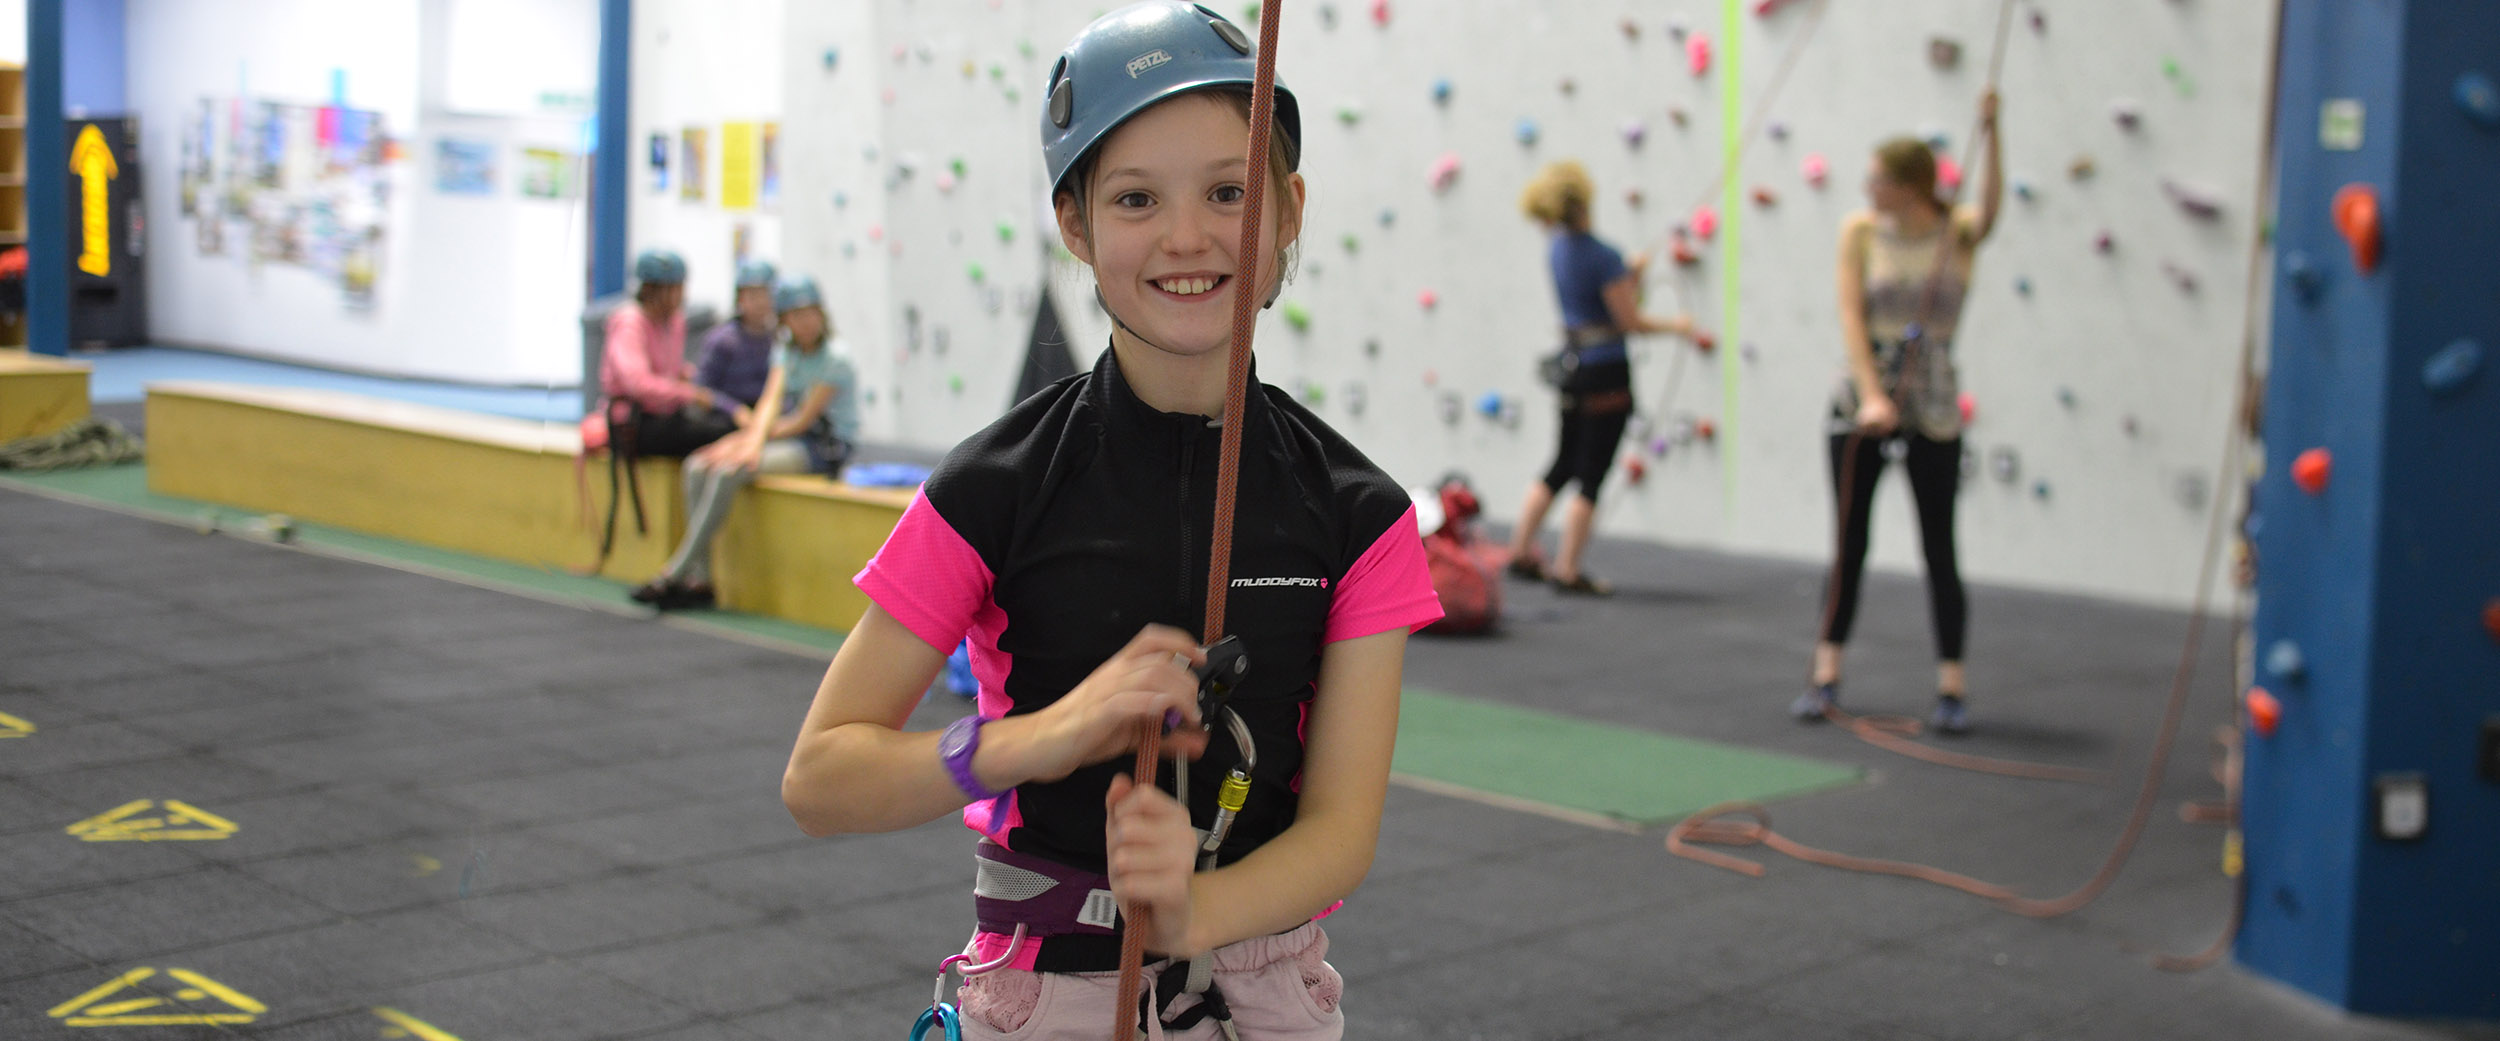 A young girl at an indoor climbing wall